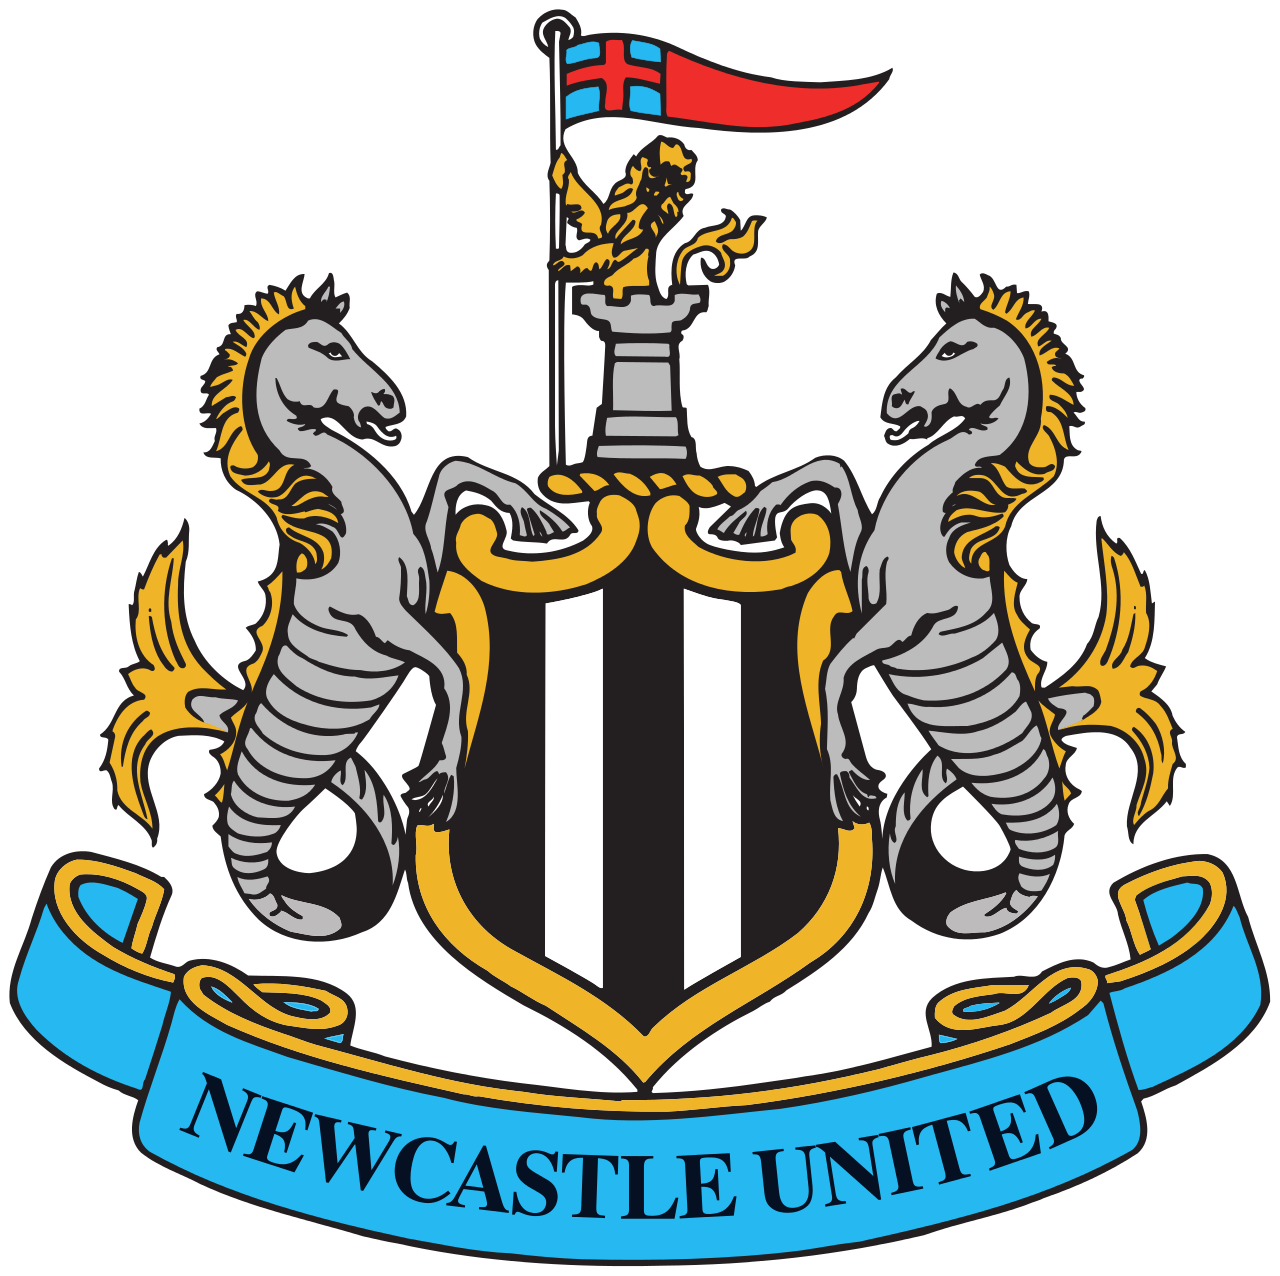 http://upload.wikimedia.org/wikipedia/it/9/92/Newcastle_United.png